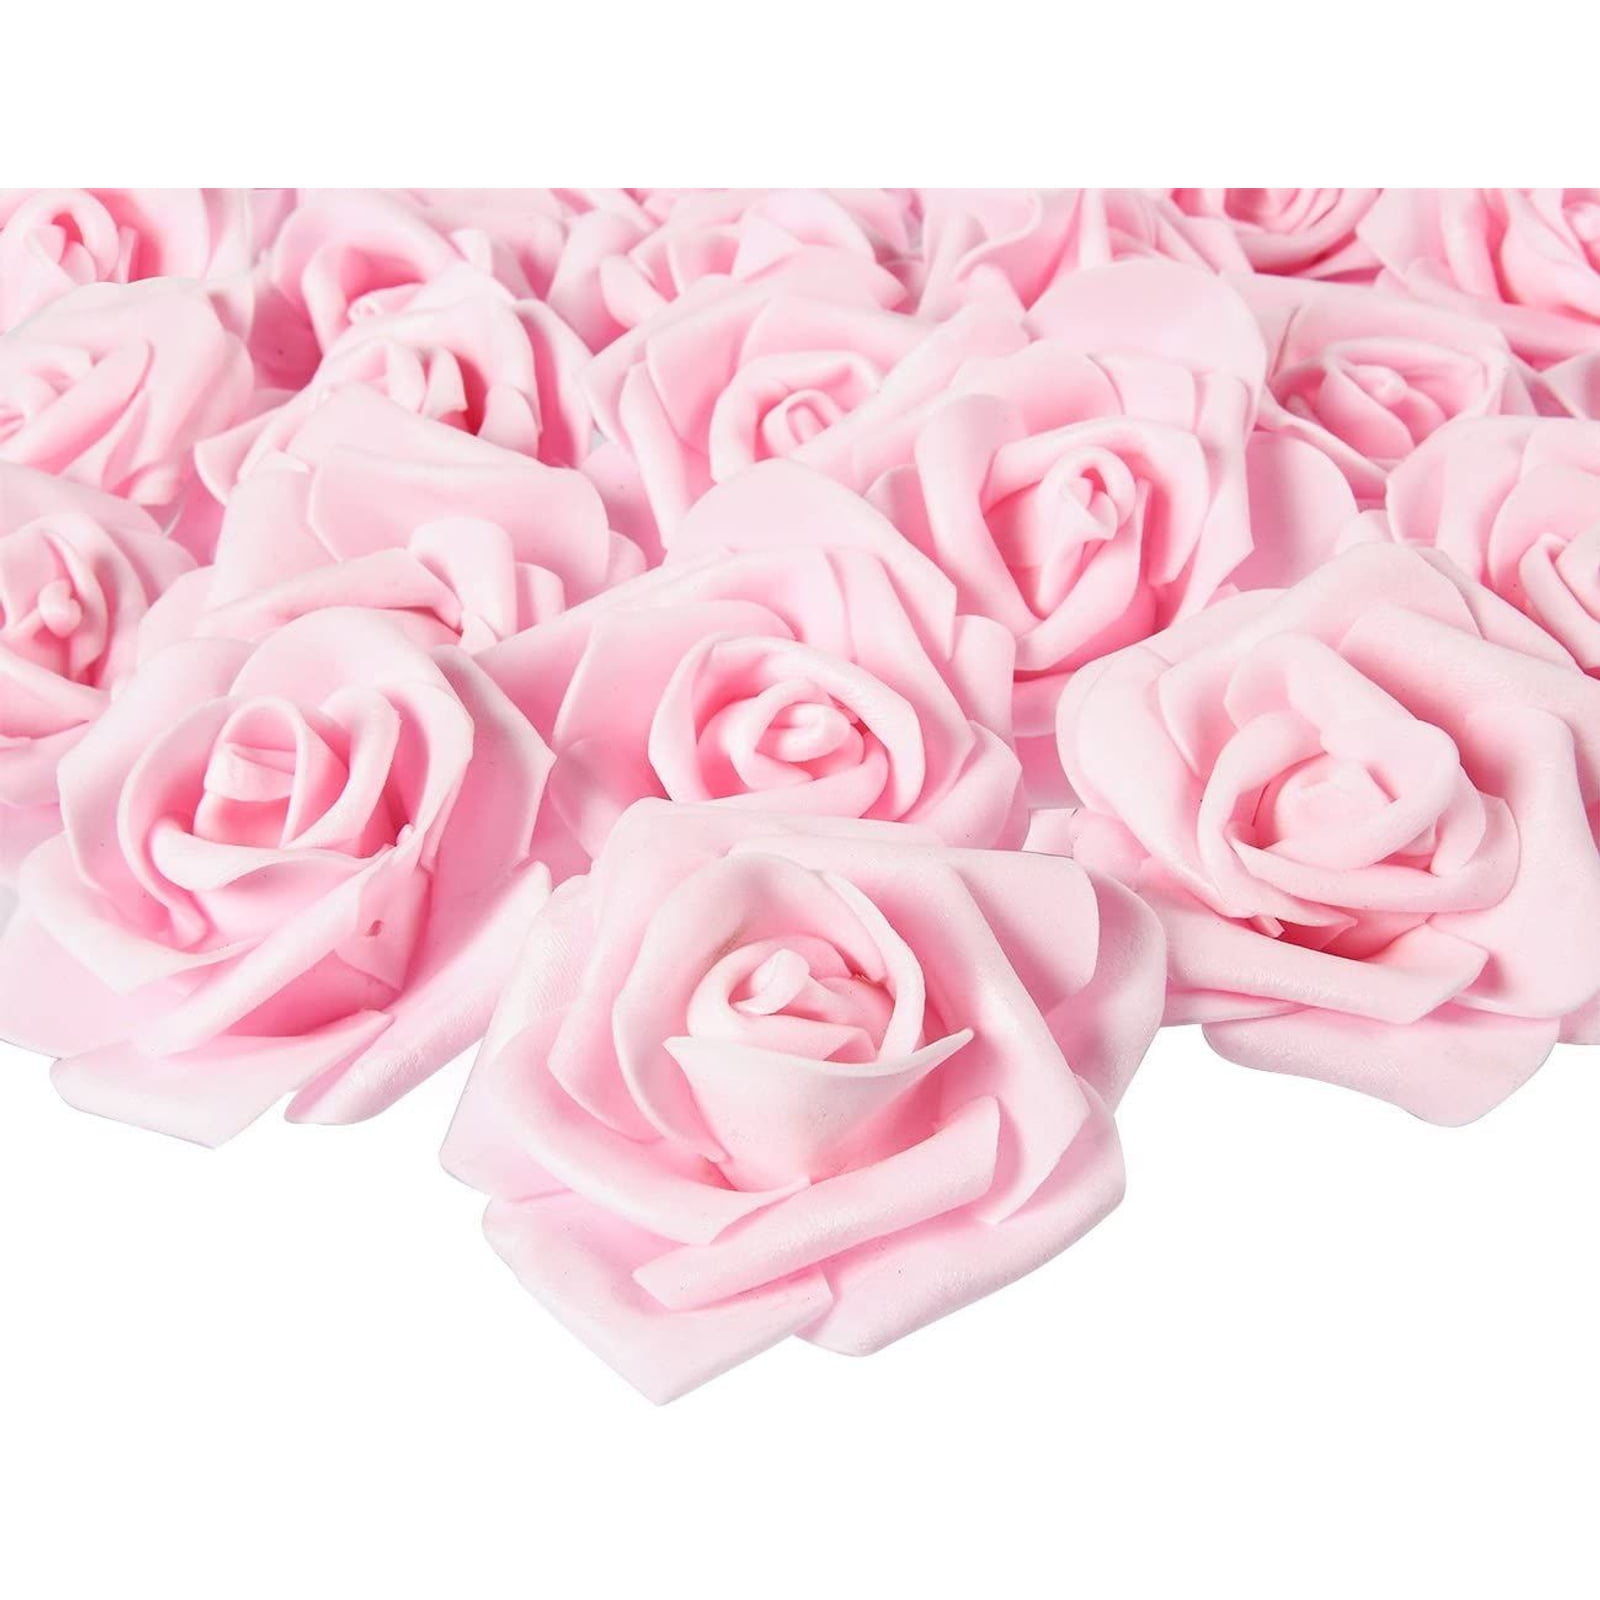 Beautiful Artificial Rose Petals 100 pc set US Seller Ships same Day 